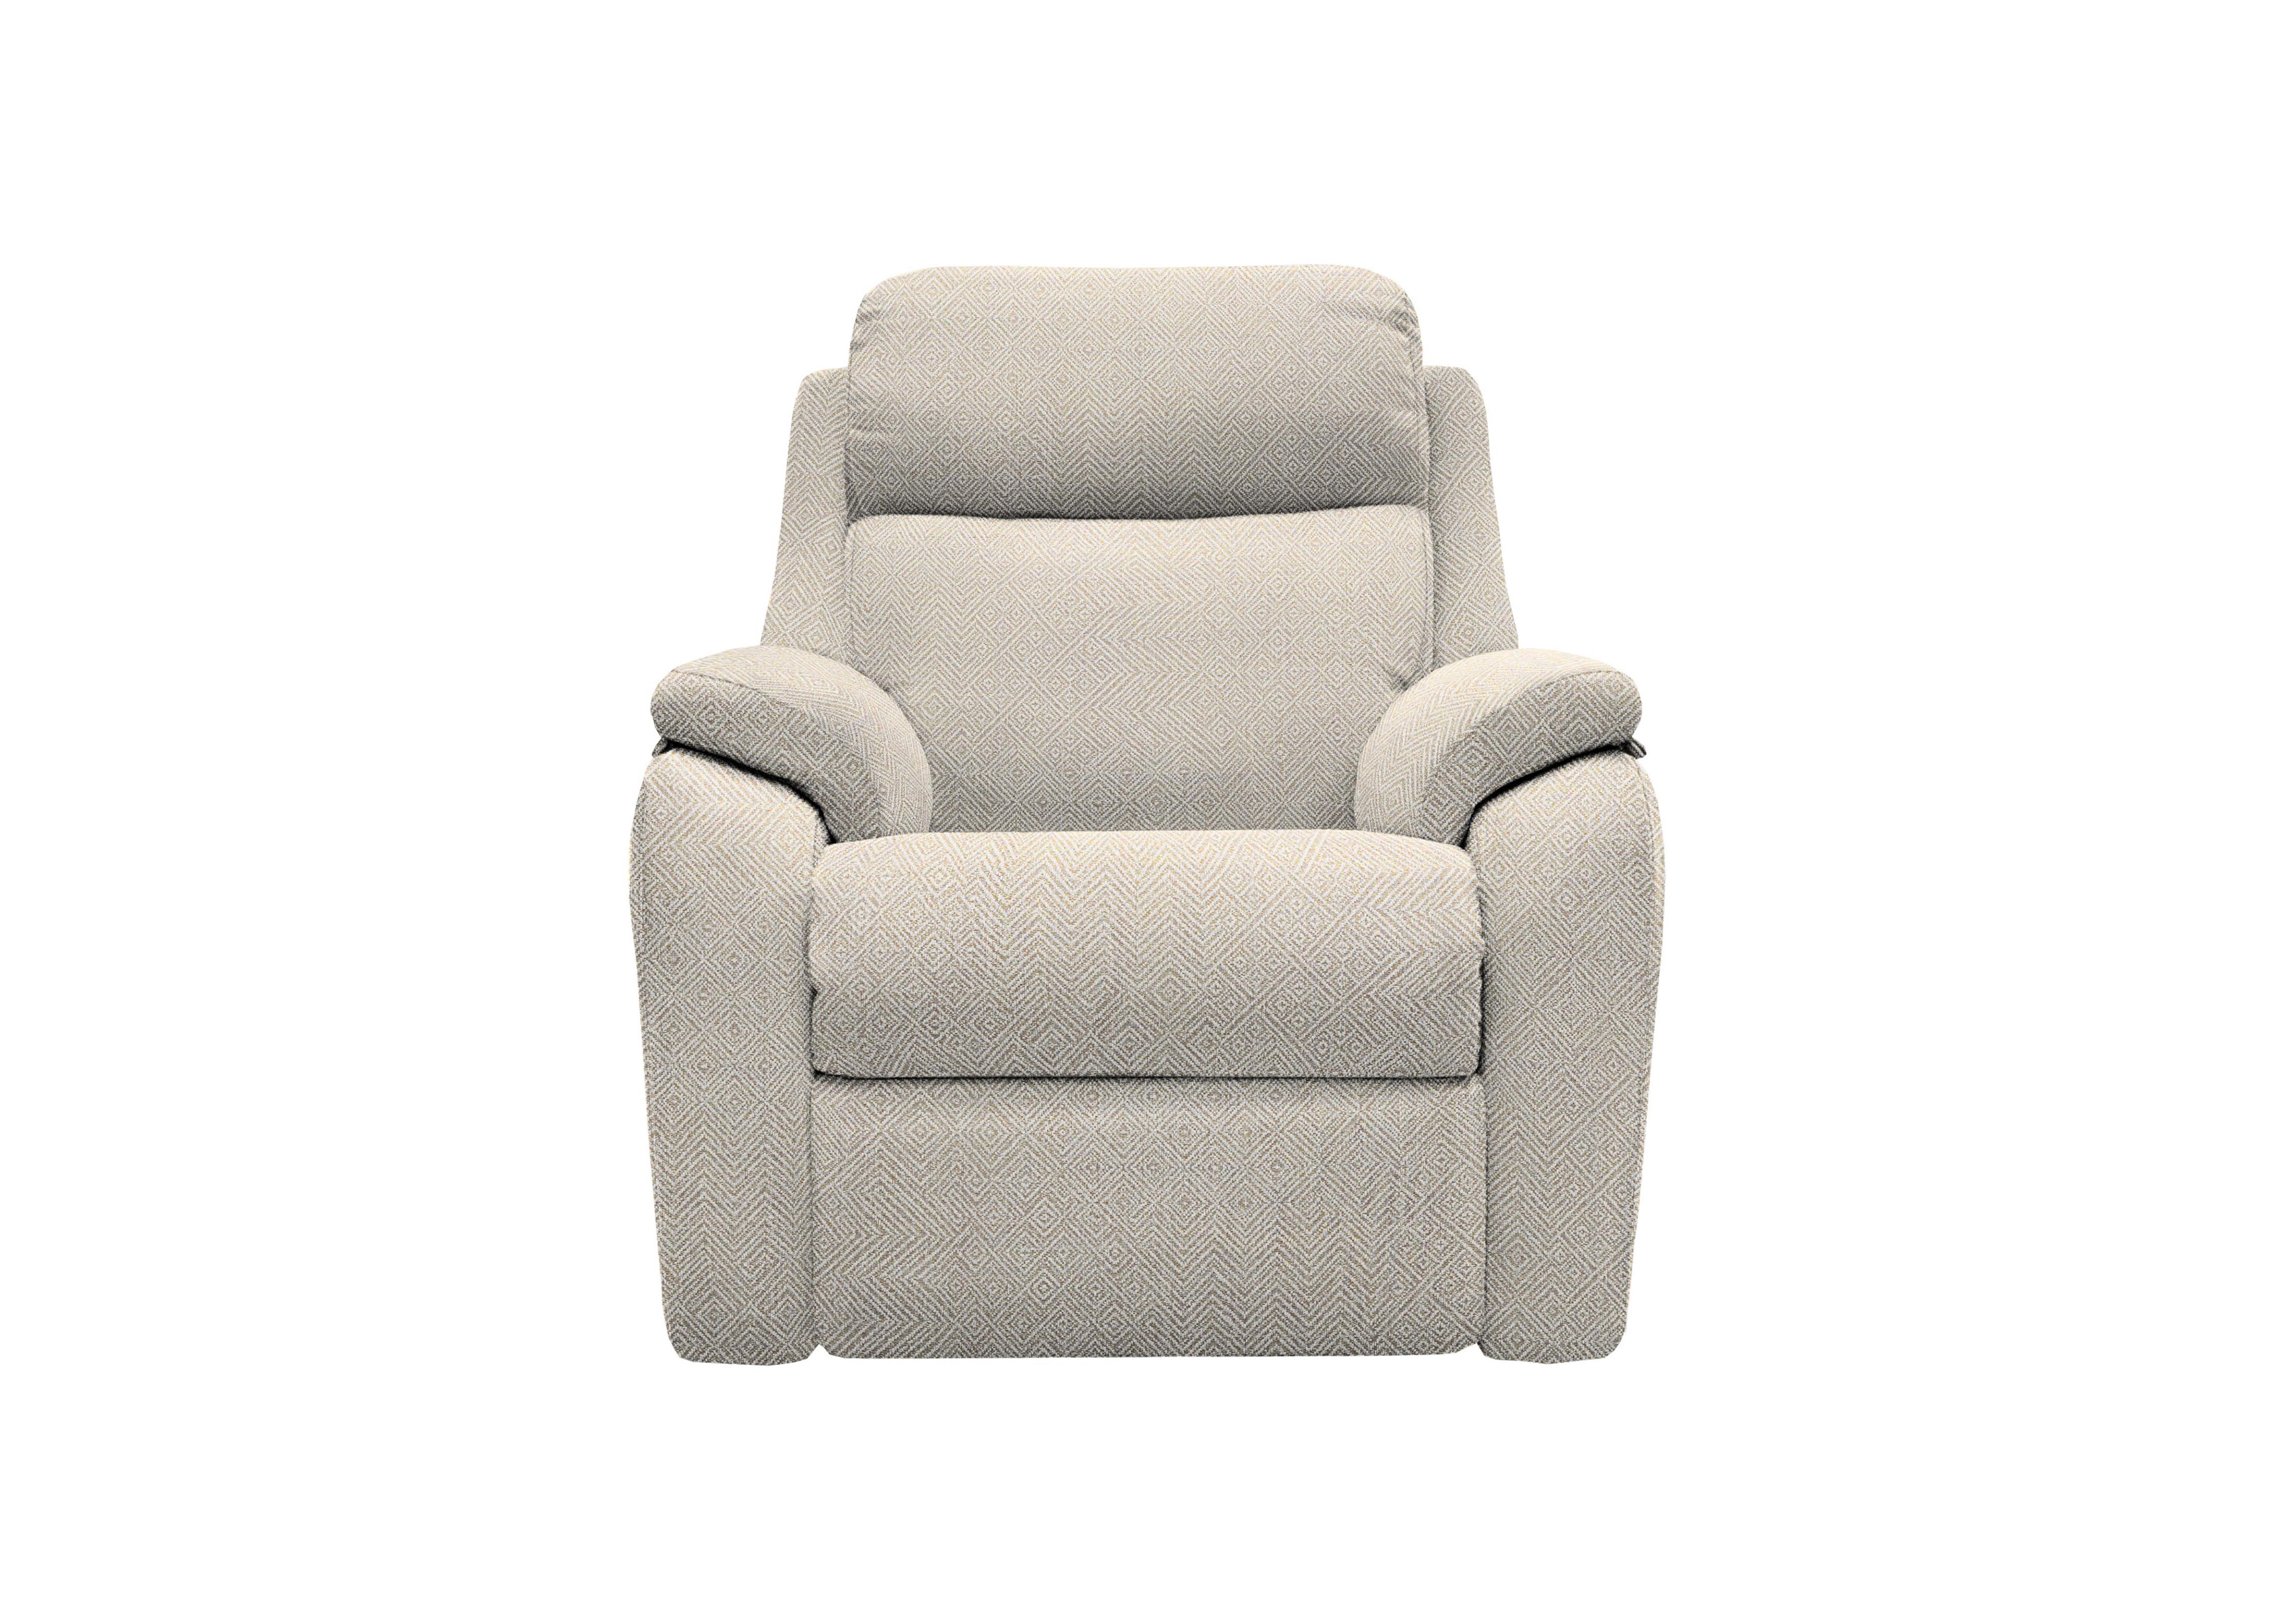 Kingsbury Fabric Armchair in B011 Nebular Blush on Furniture Village